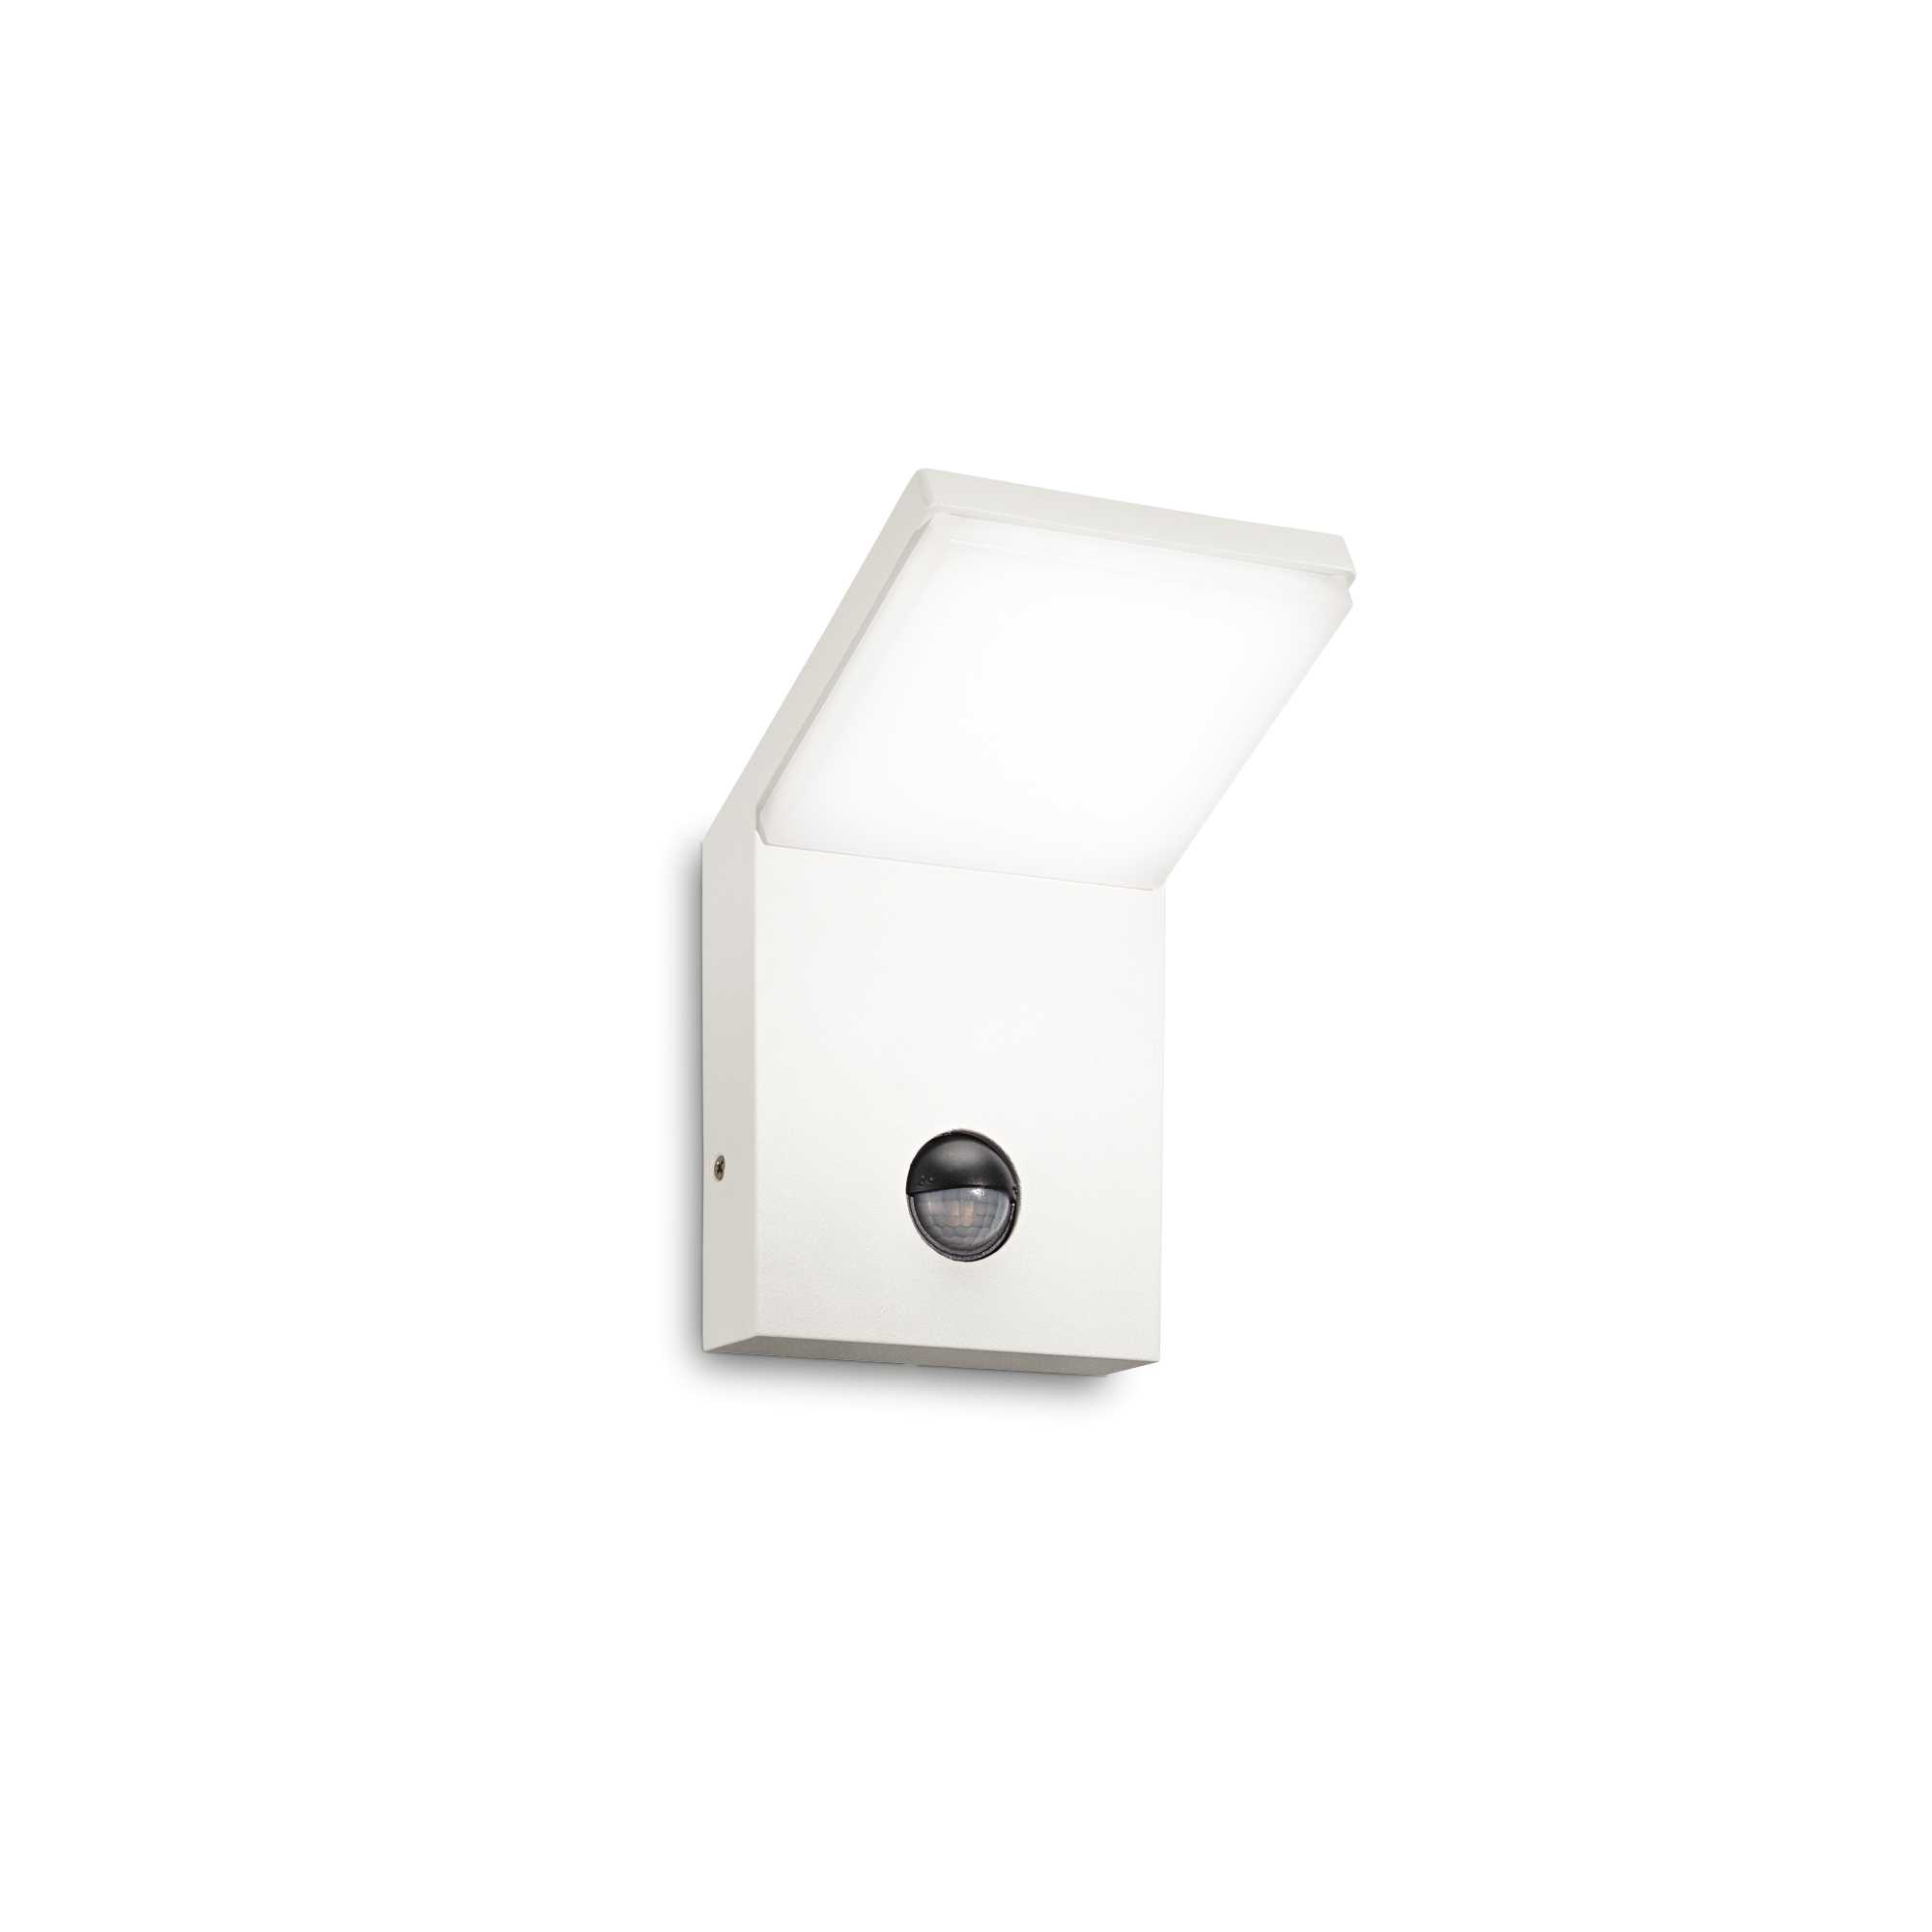 AD hotelska oprema Vanjska zidna lampa Style ap senzor (3000k)- Bijele boje slika proizvoda